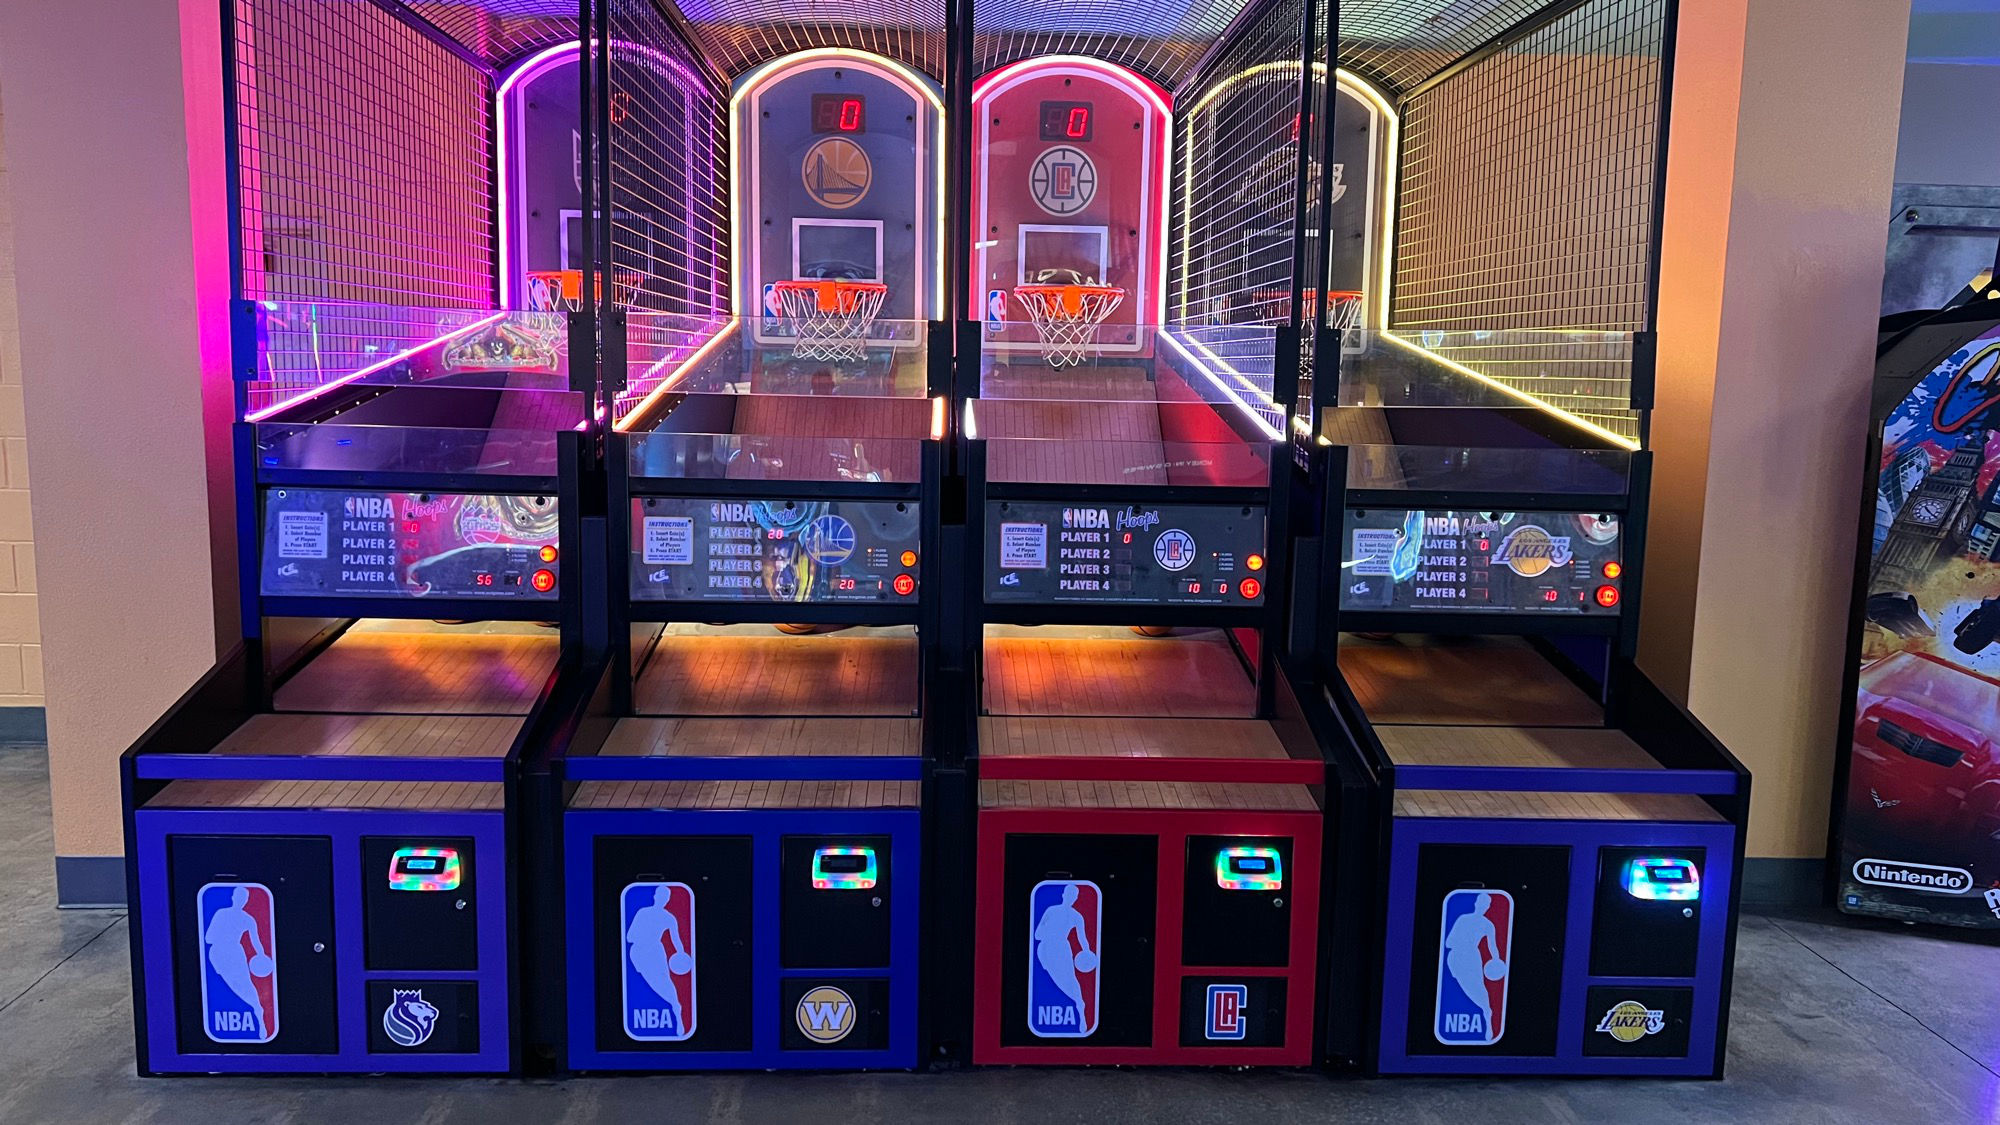 Boardwalk Arcade NBA Hoops